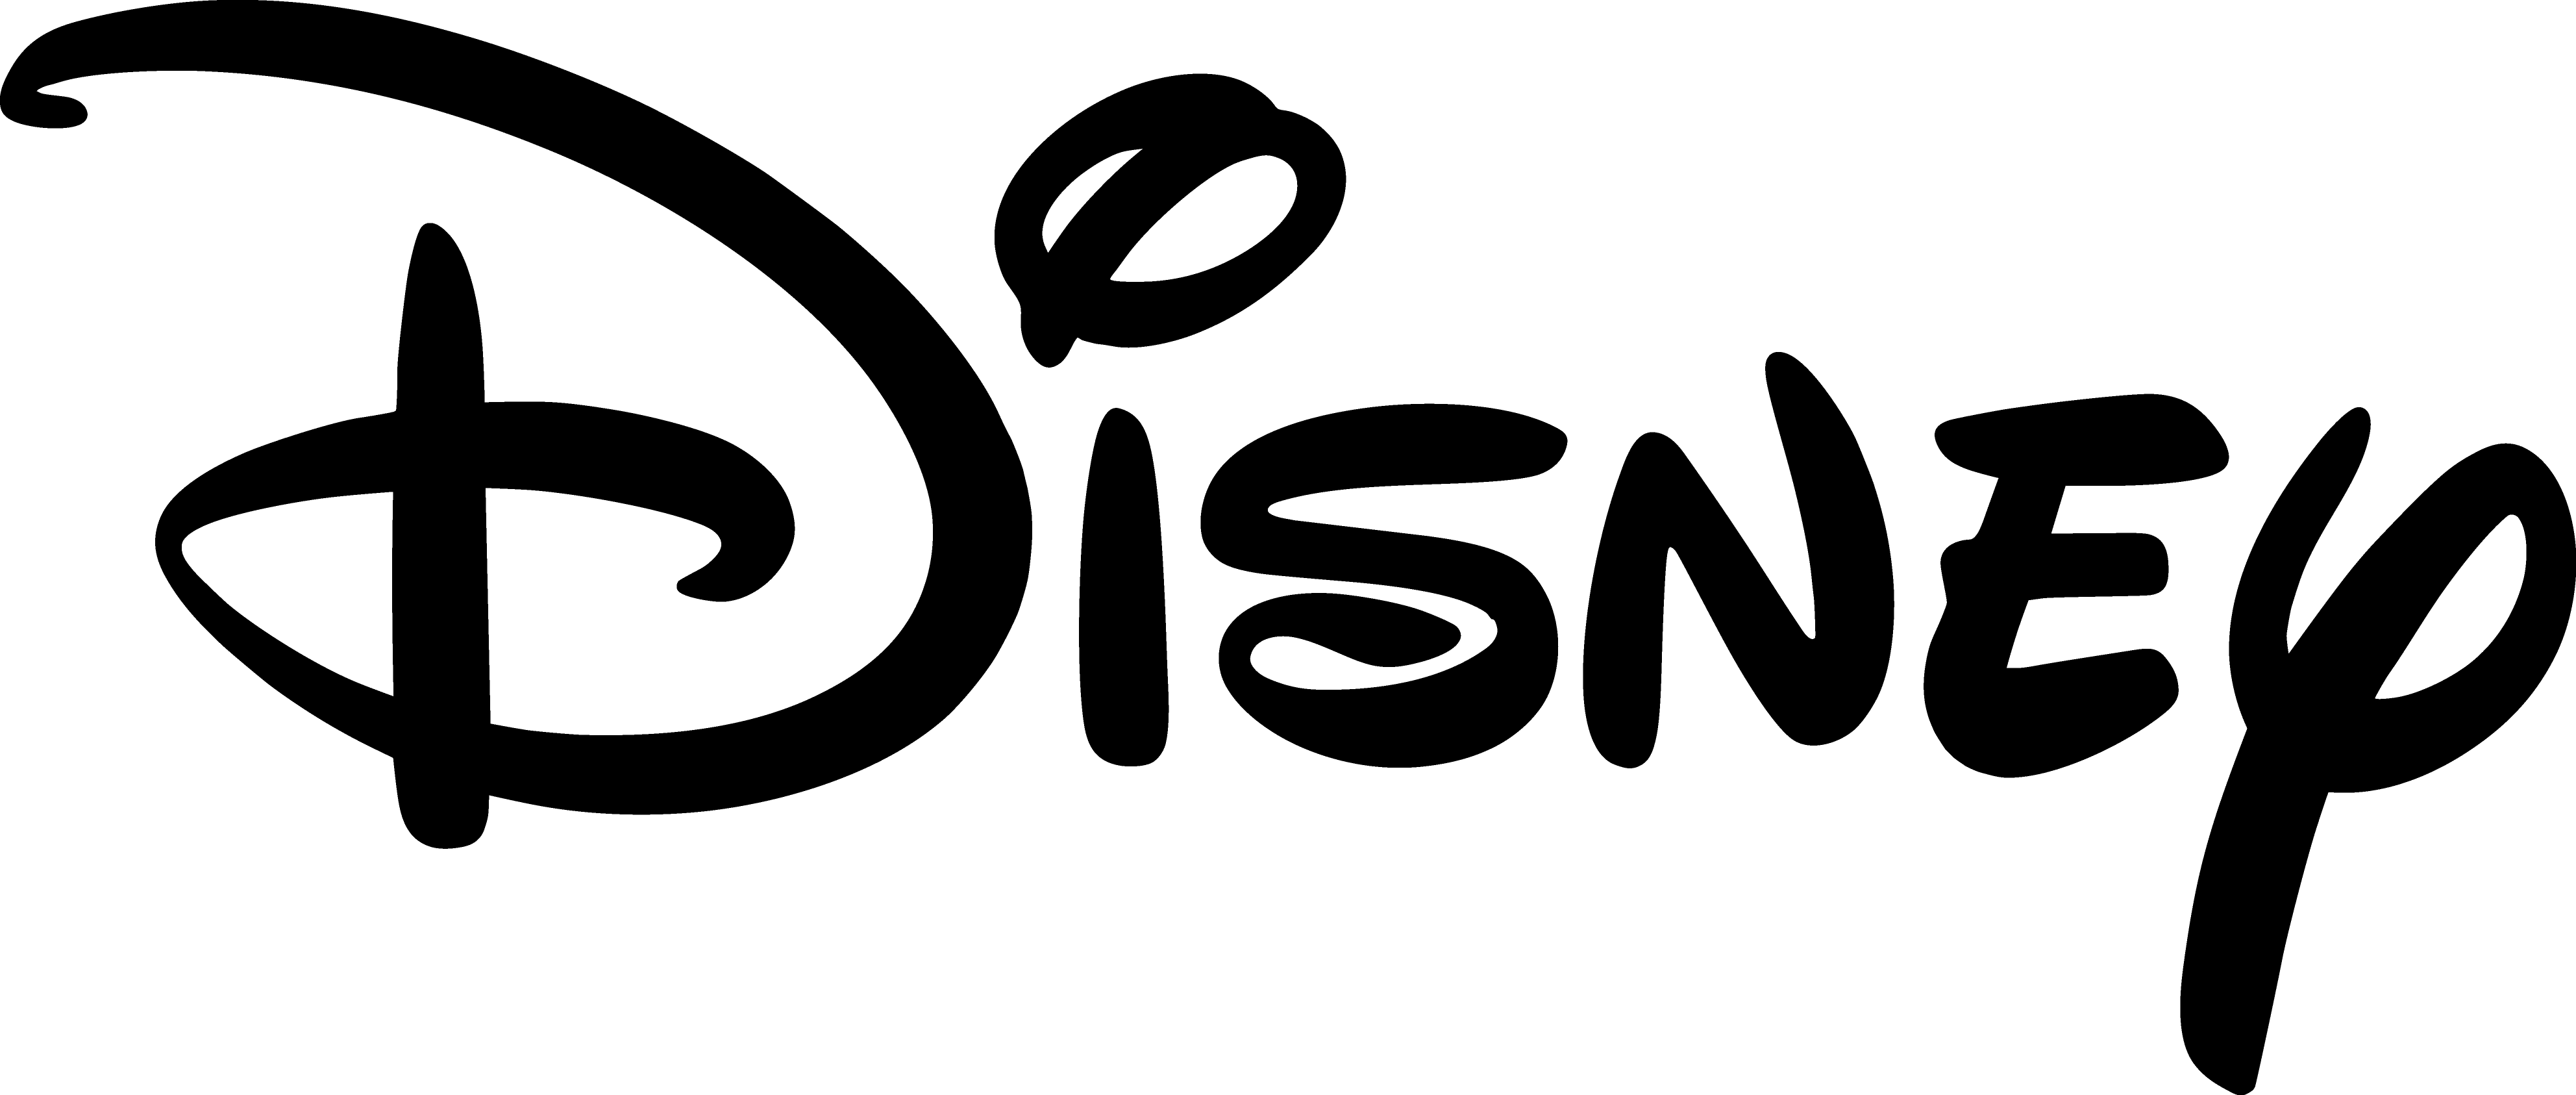 Dysney Logo - Walt Disney logo PNG images free download